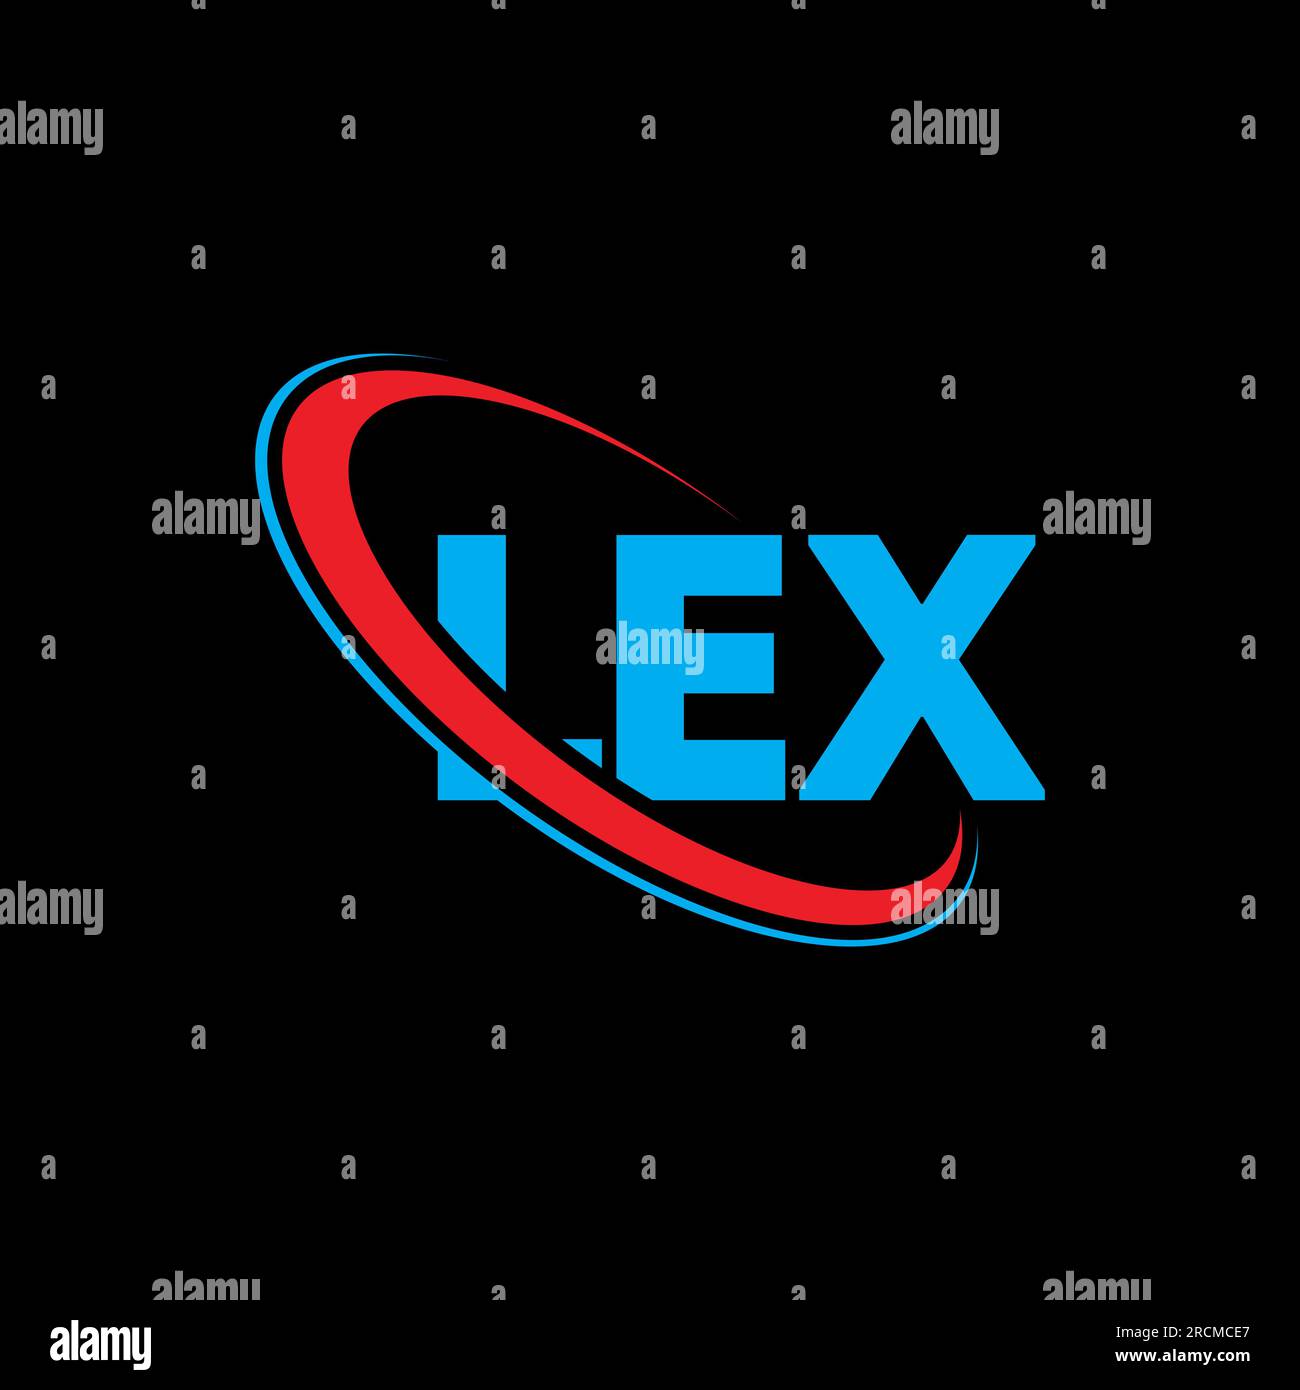 Lex marketing logo Stock Vector Images - Alamy